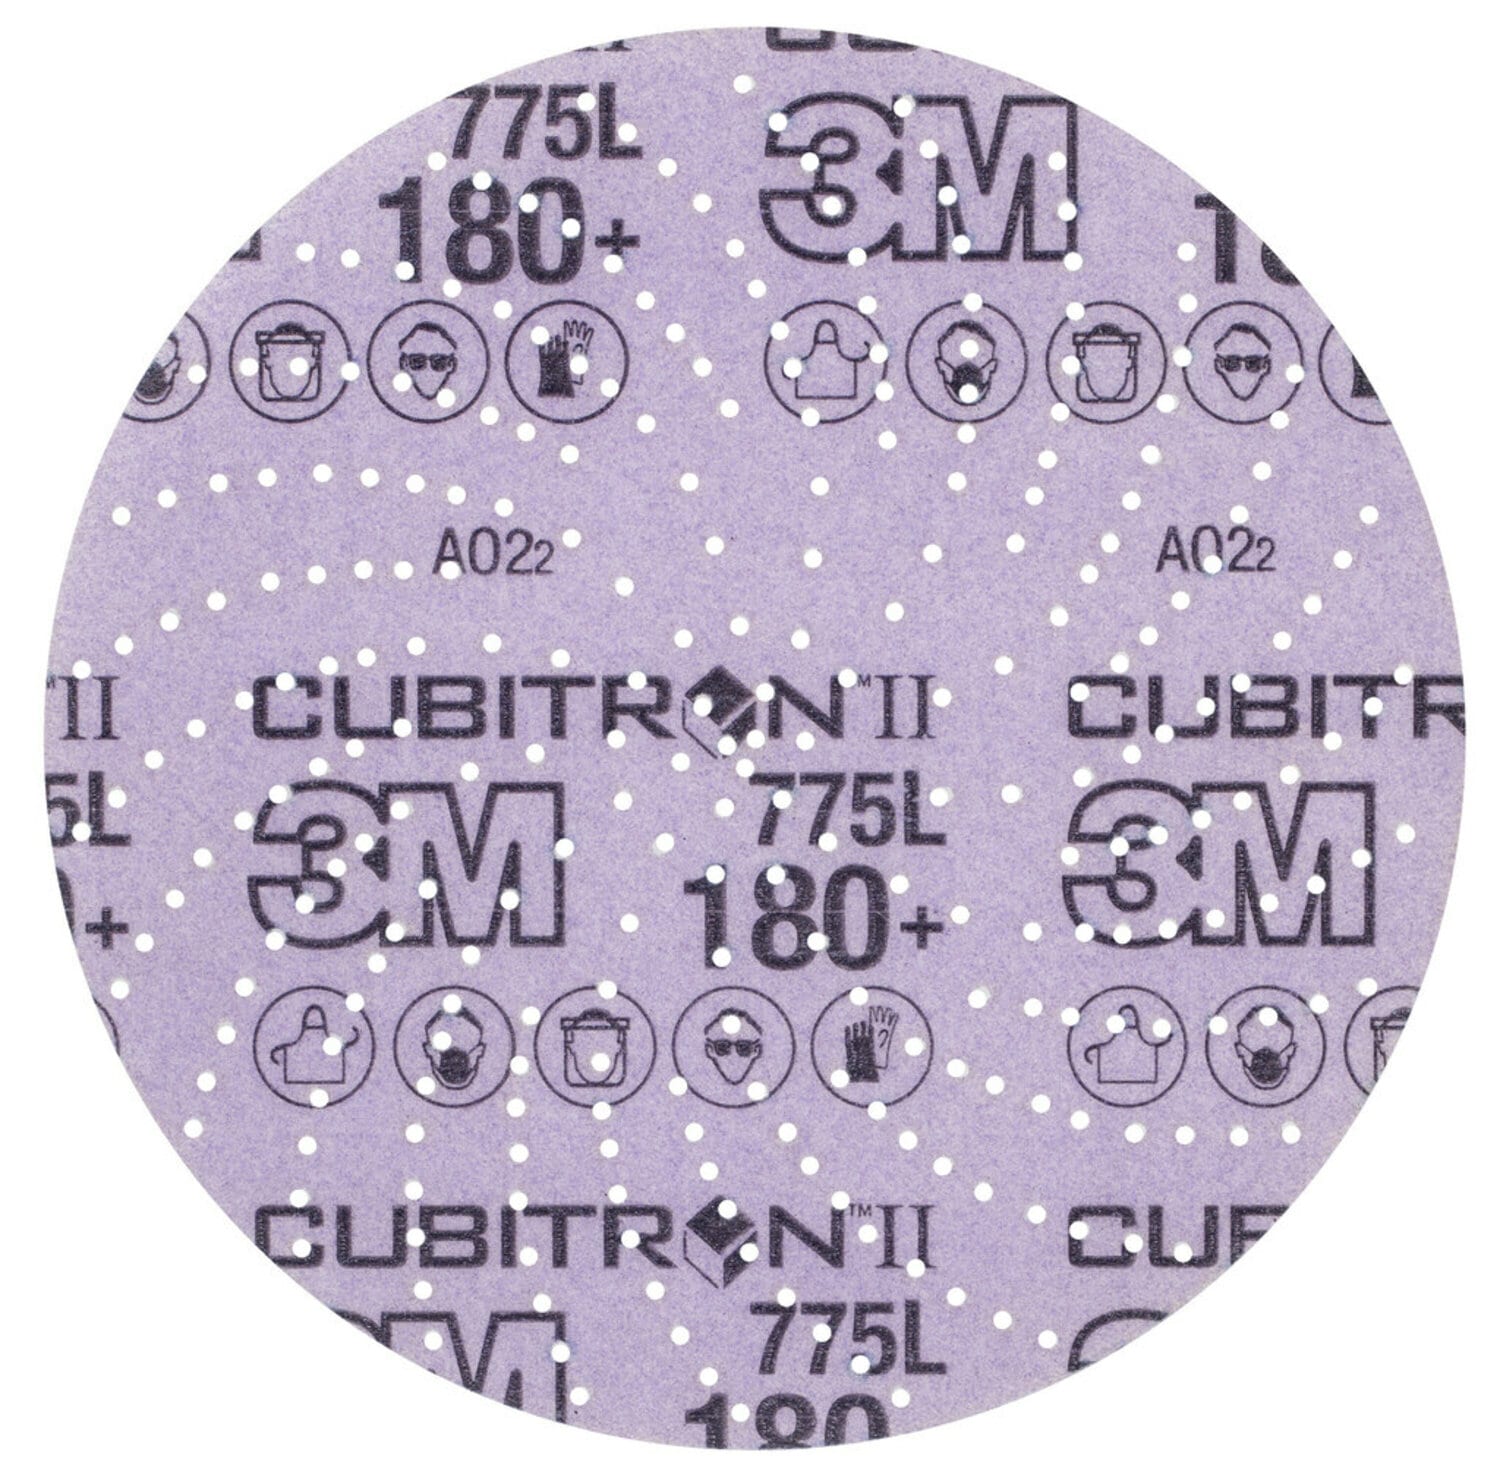 7100235259 - 3M Xtract Cubitron II Film Disc 775L, 180+, 8 in, Die 800LG